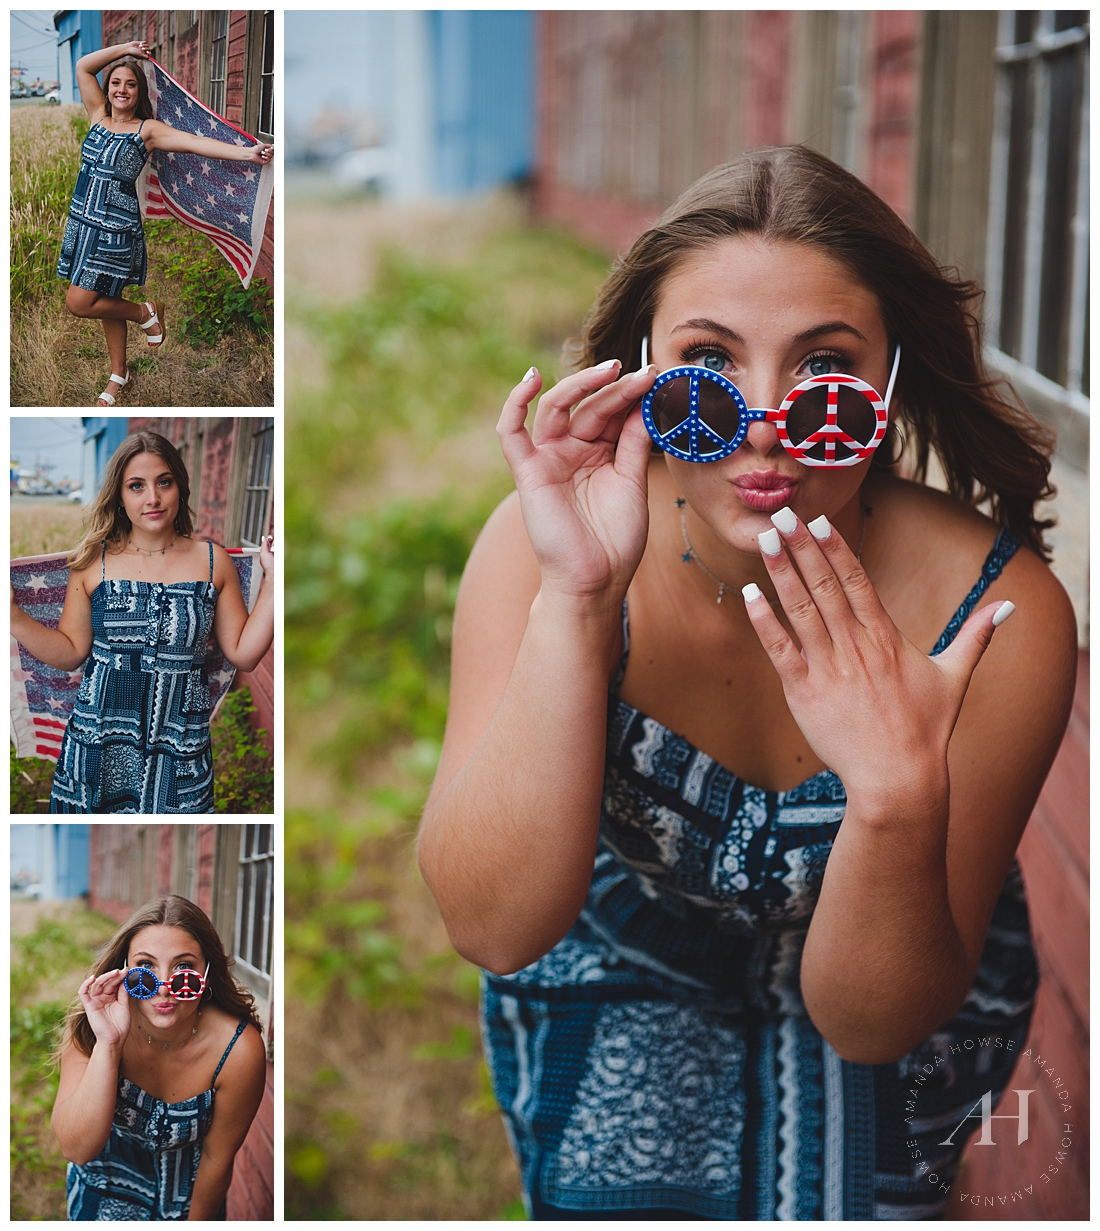 Cute USA Themed Senior Portraits with American Flag Peace Sign Glasses | Photographed by Tacoma Senior Photographer Amanda Howse